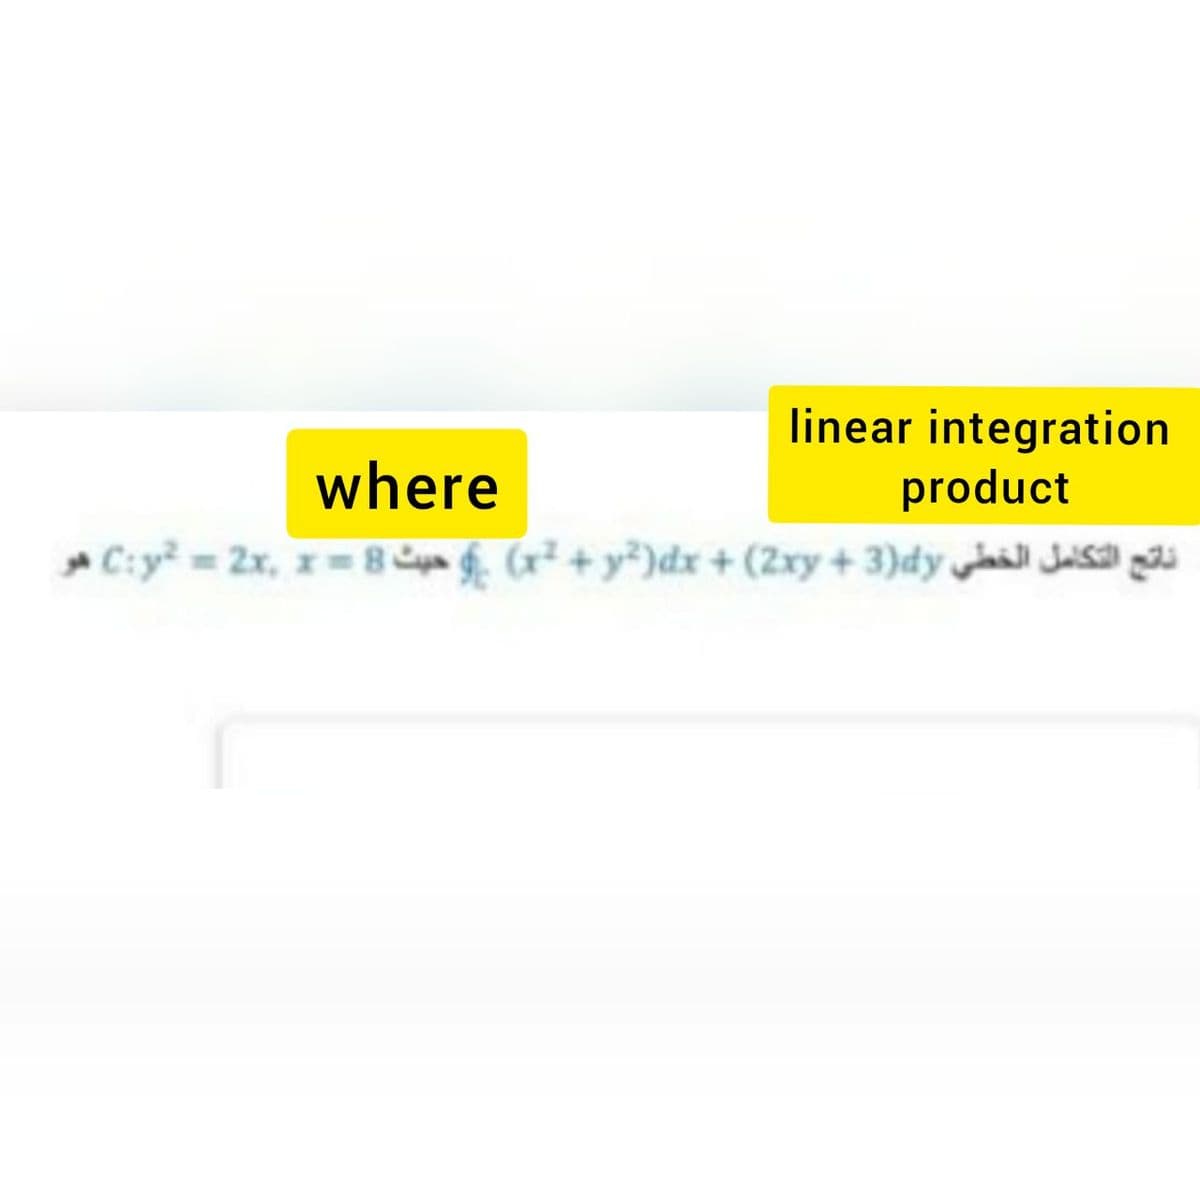 linear integration
product
where
C:y = 2x, =8 Cn ģ. (x² + y?)dx + (2xy + 3)dy wall Jasa) gai
